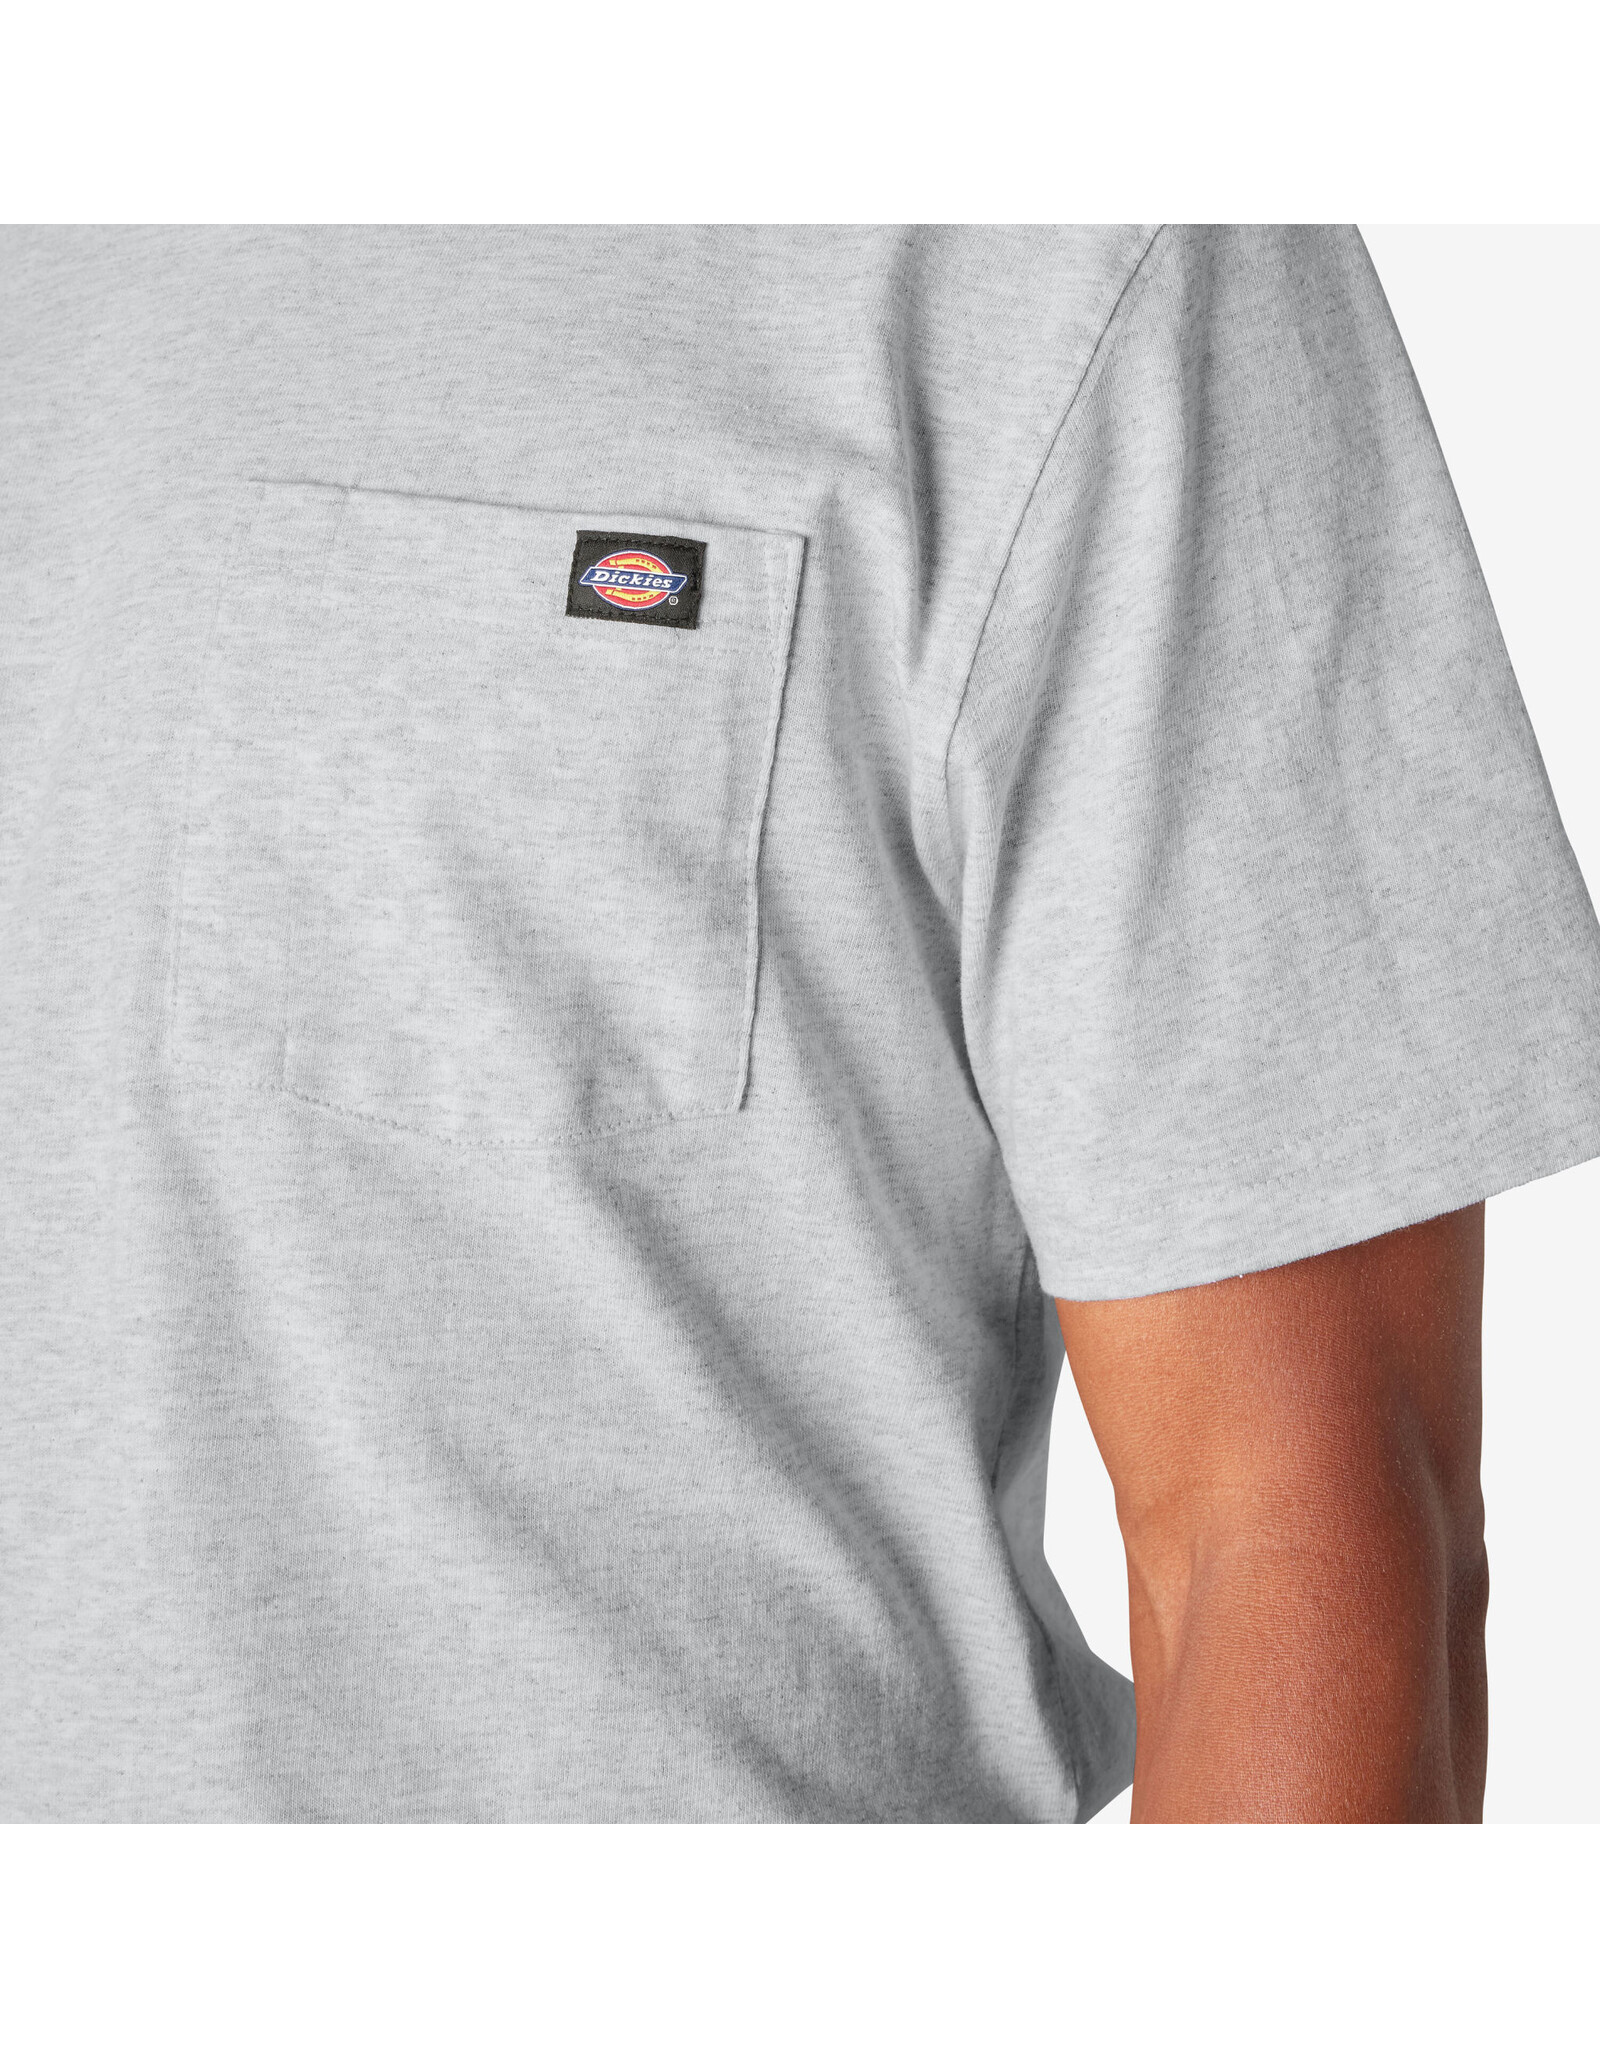 DICKIES Heavyweight Short Sleeve Pocket T-Shirt Ash Grey - WS450AG